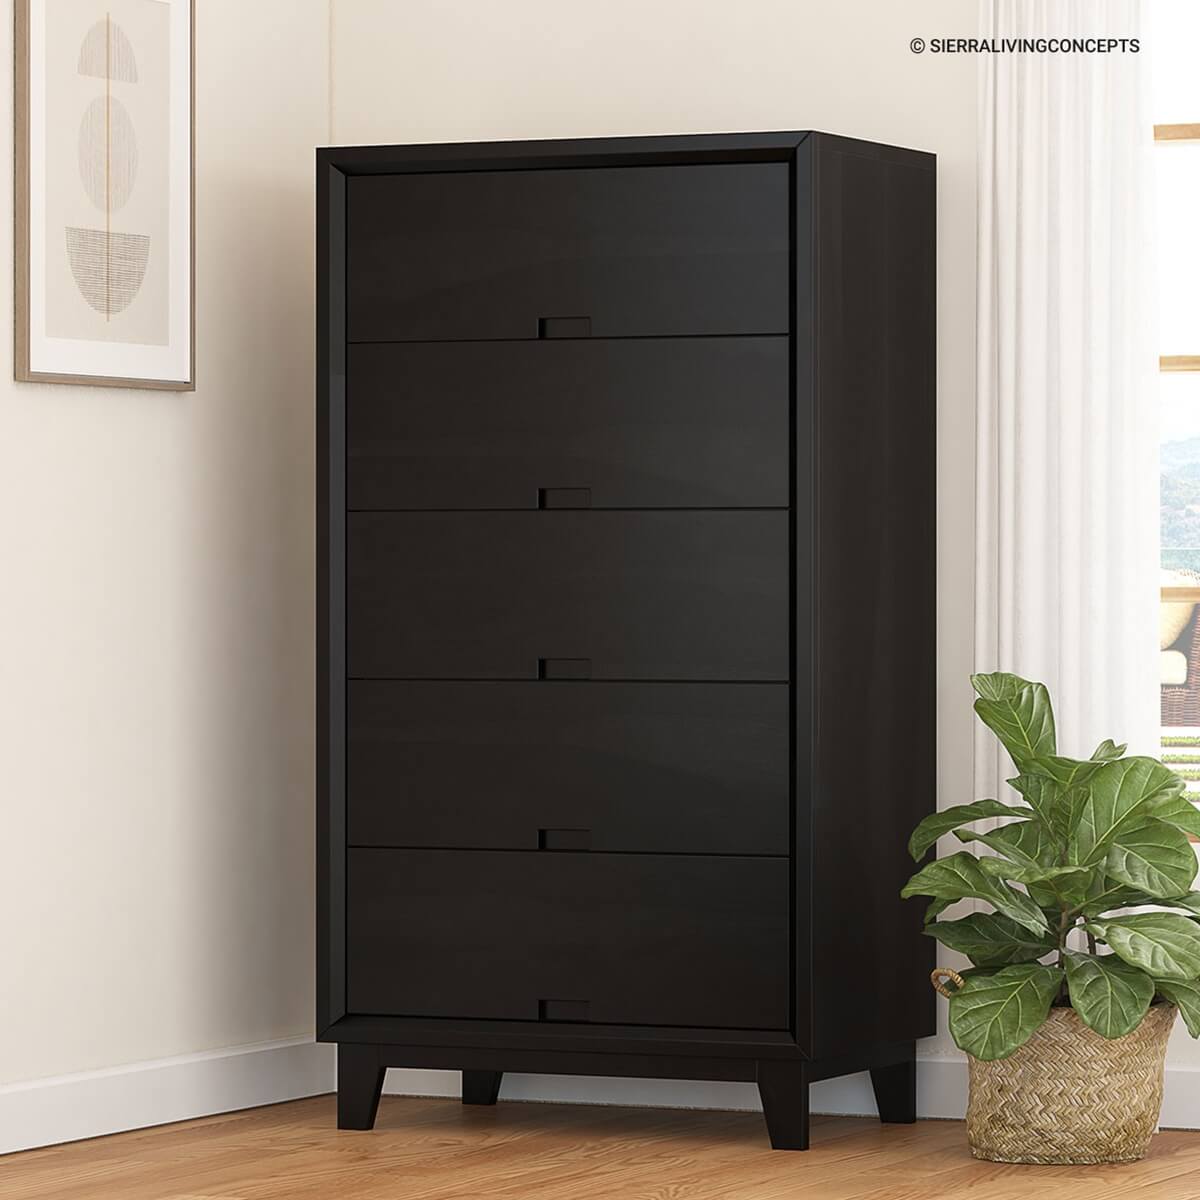 Modern Simplicity Mocha Solid Wood 6 Drawer Tall Dresser.